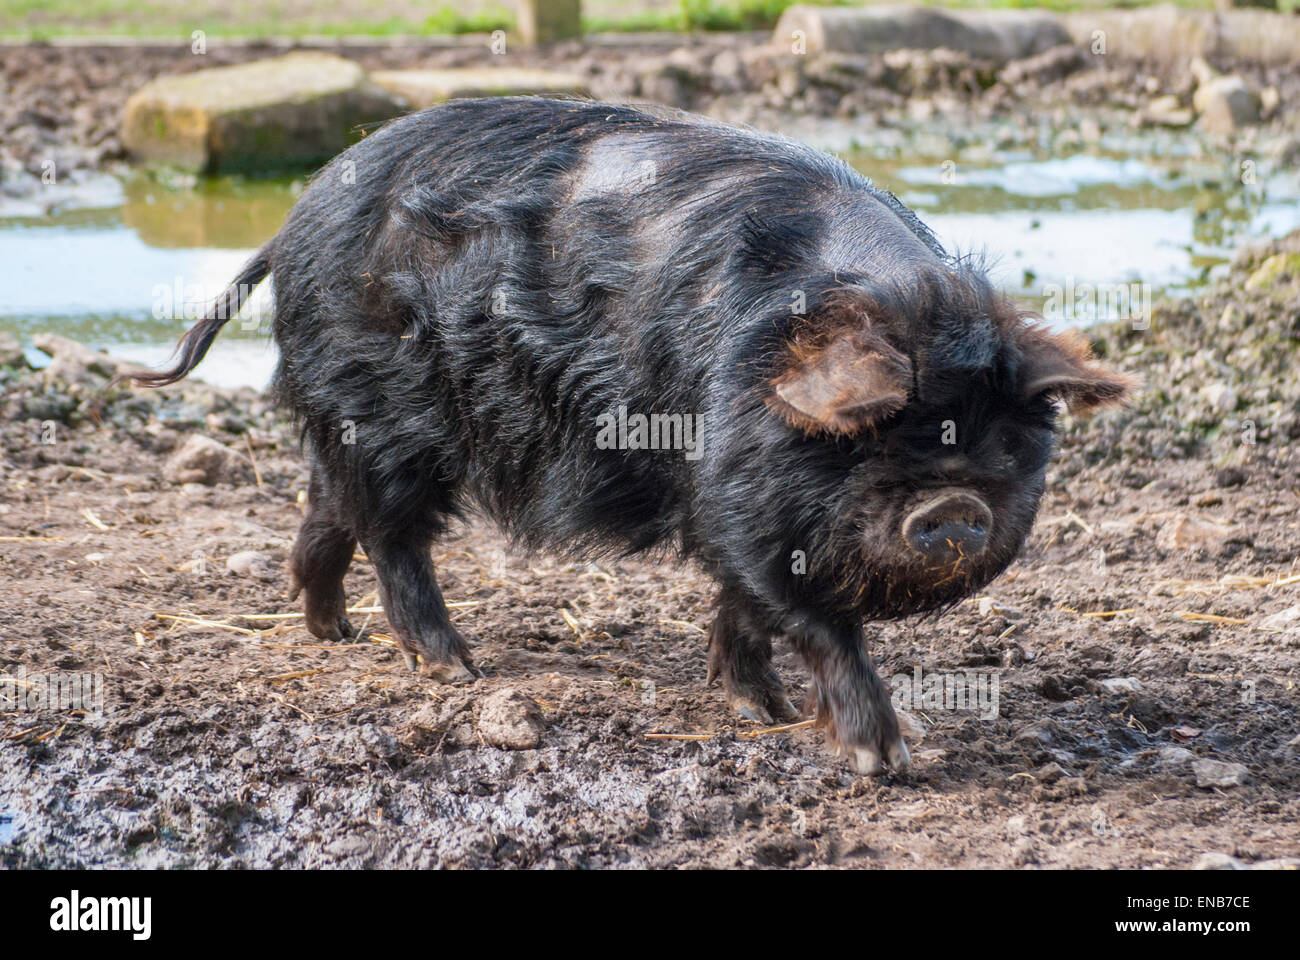 Black pig, taken at a sanctuary Stock Photo